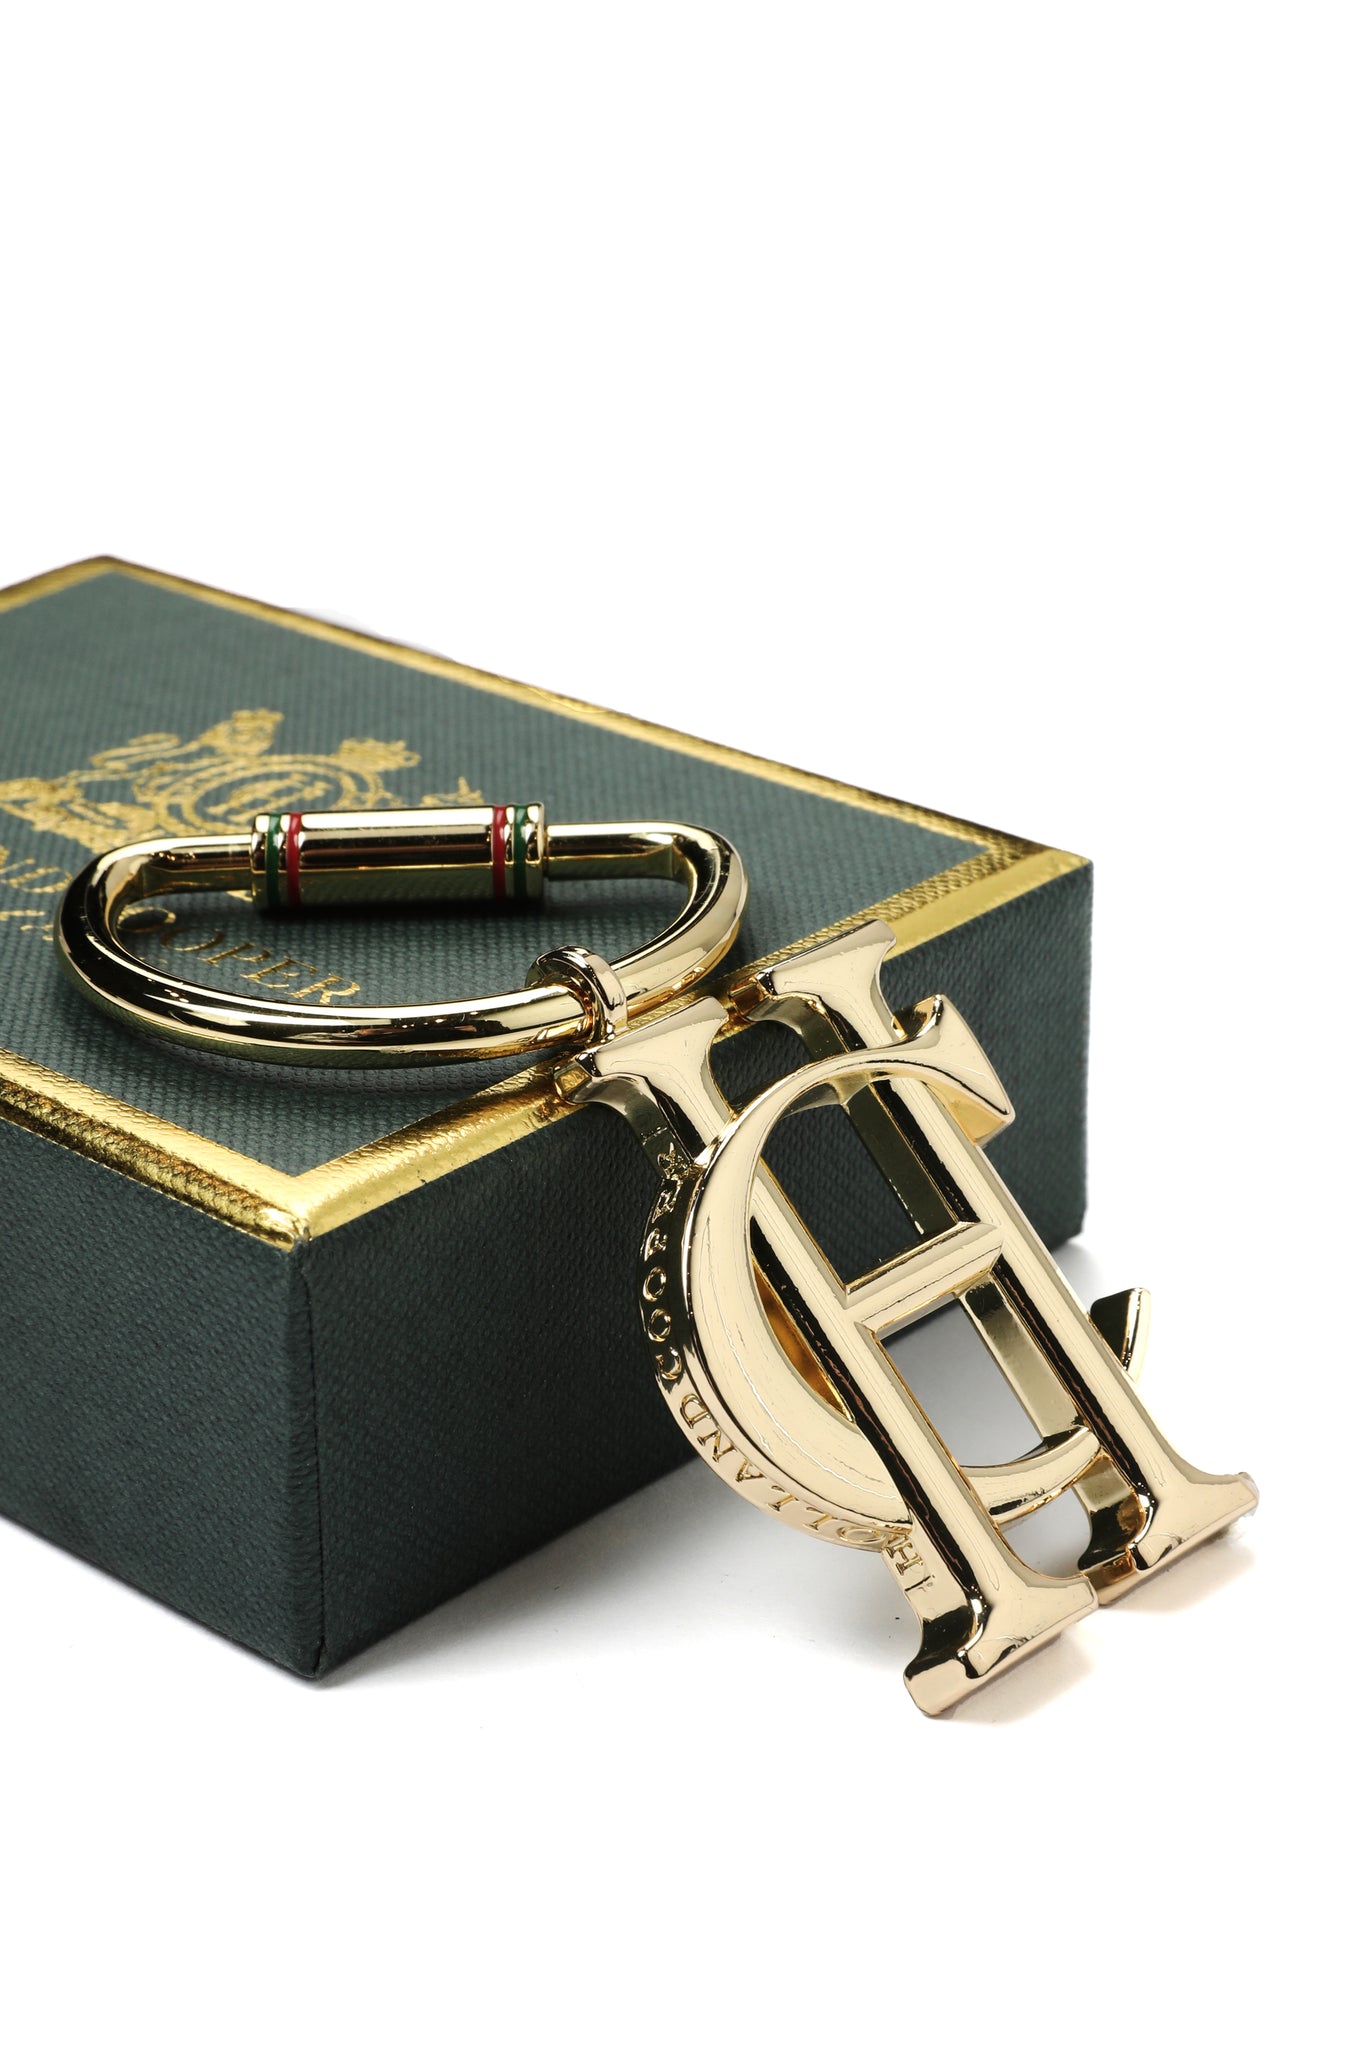  Mini Copper Purse Chains Shoulder Crossbody Strap Bag  Accessories Charm Decoration (Antique Gold,18'') : Clothing, Shoes & Jewelry